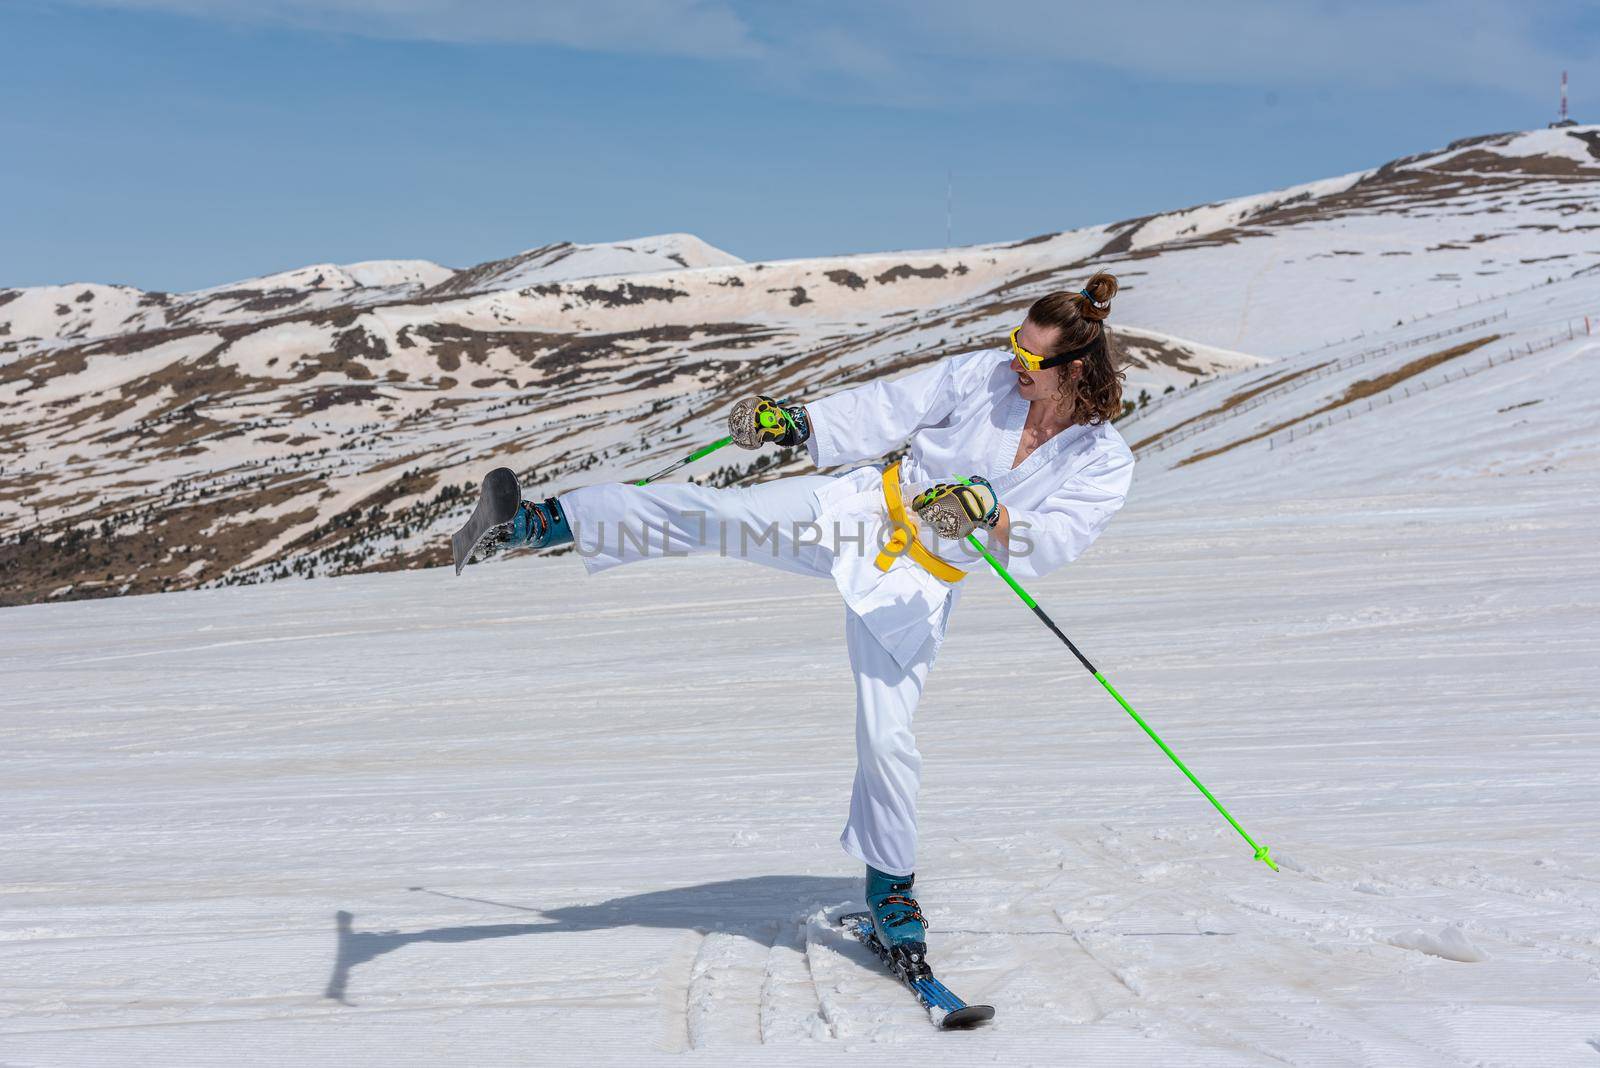 Skier dressed as a karateka at a ski station by martinscphoto